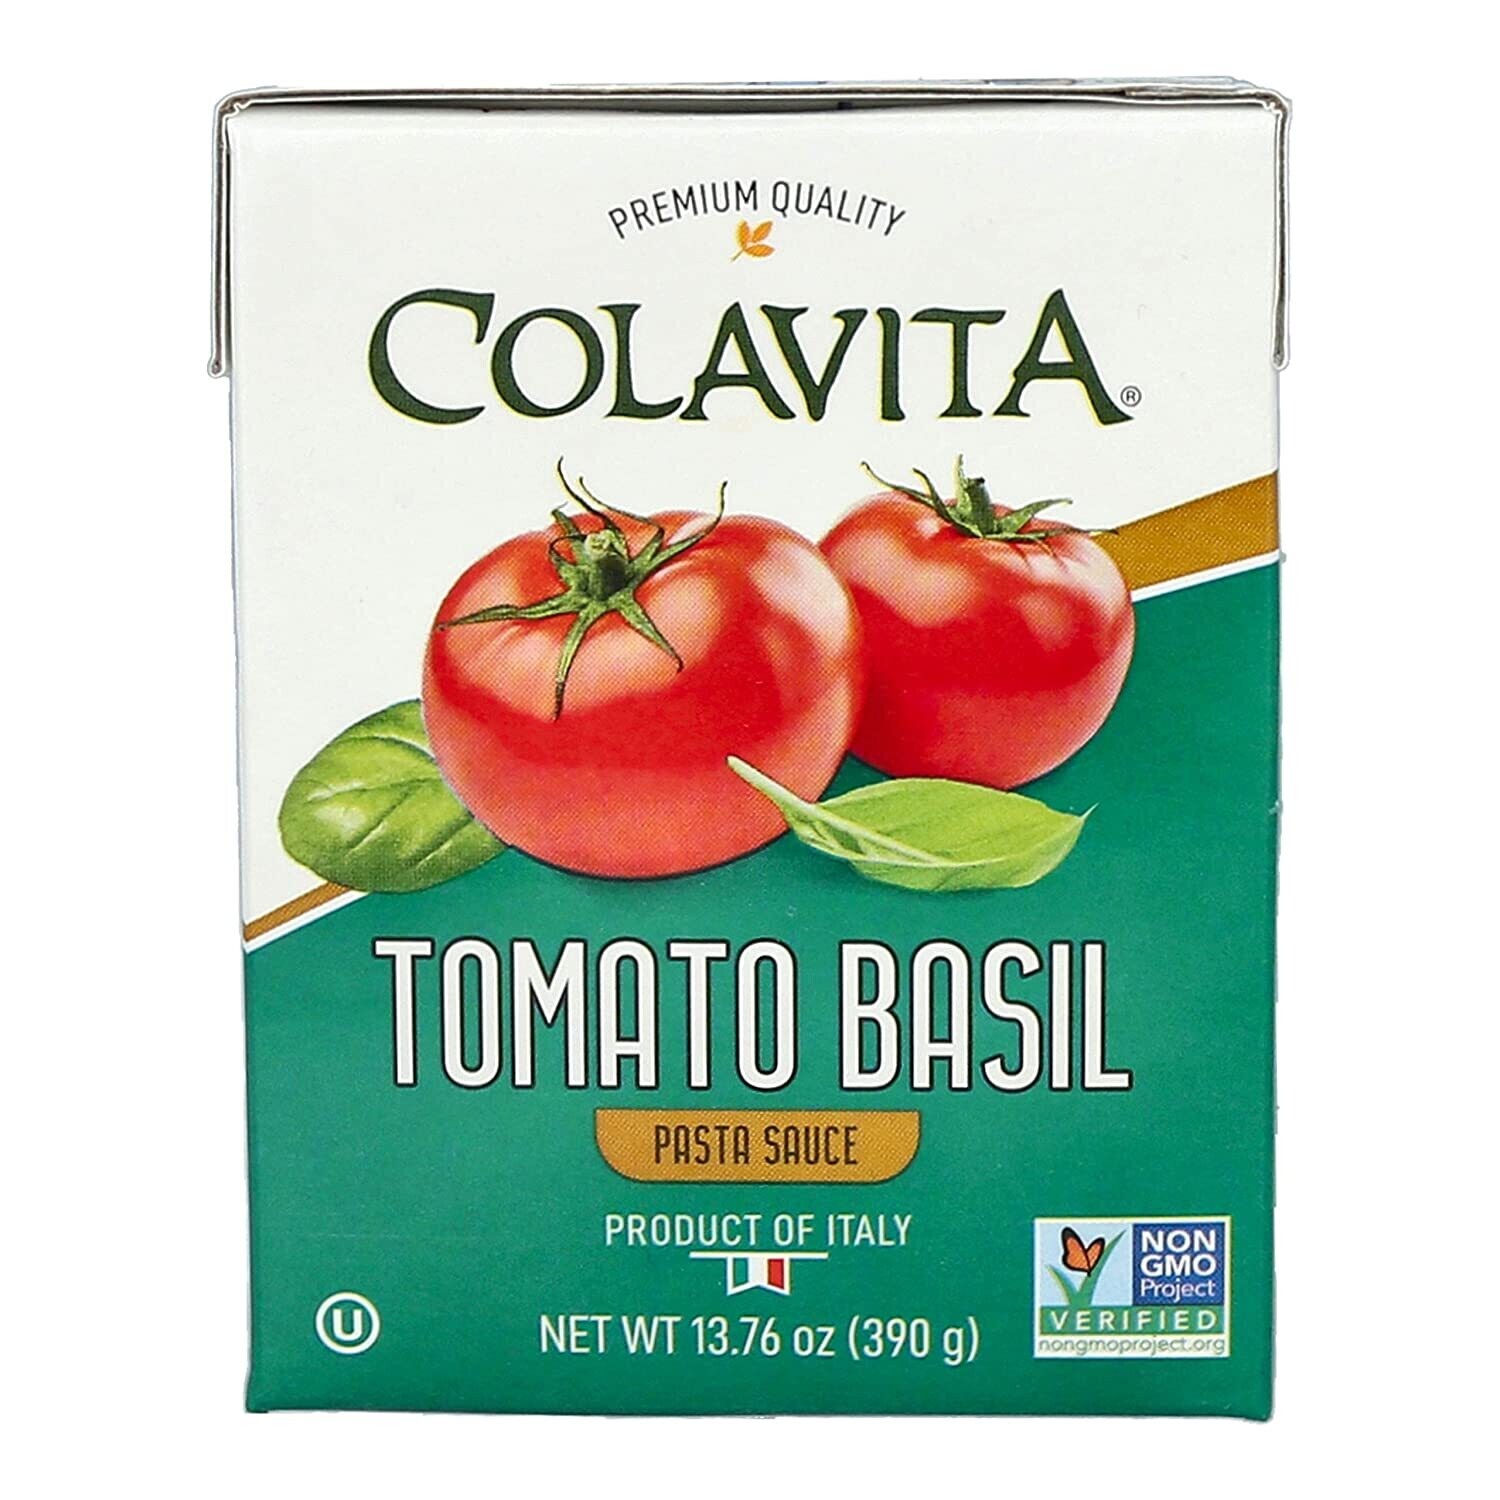 Colavita Tomato Box - Tomato Basil Pasta Sauce